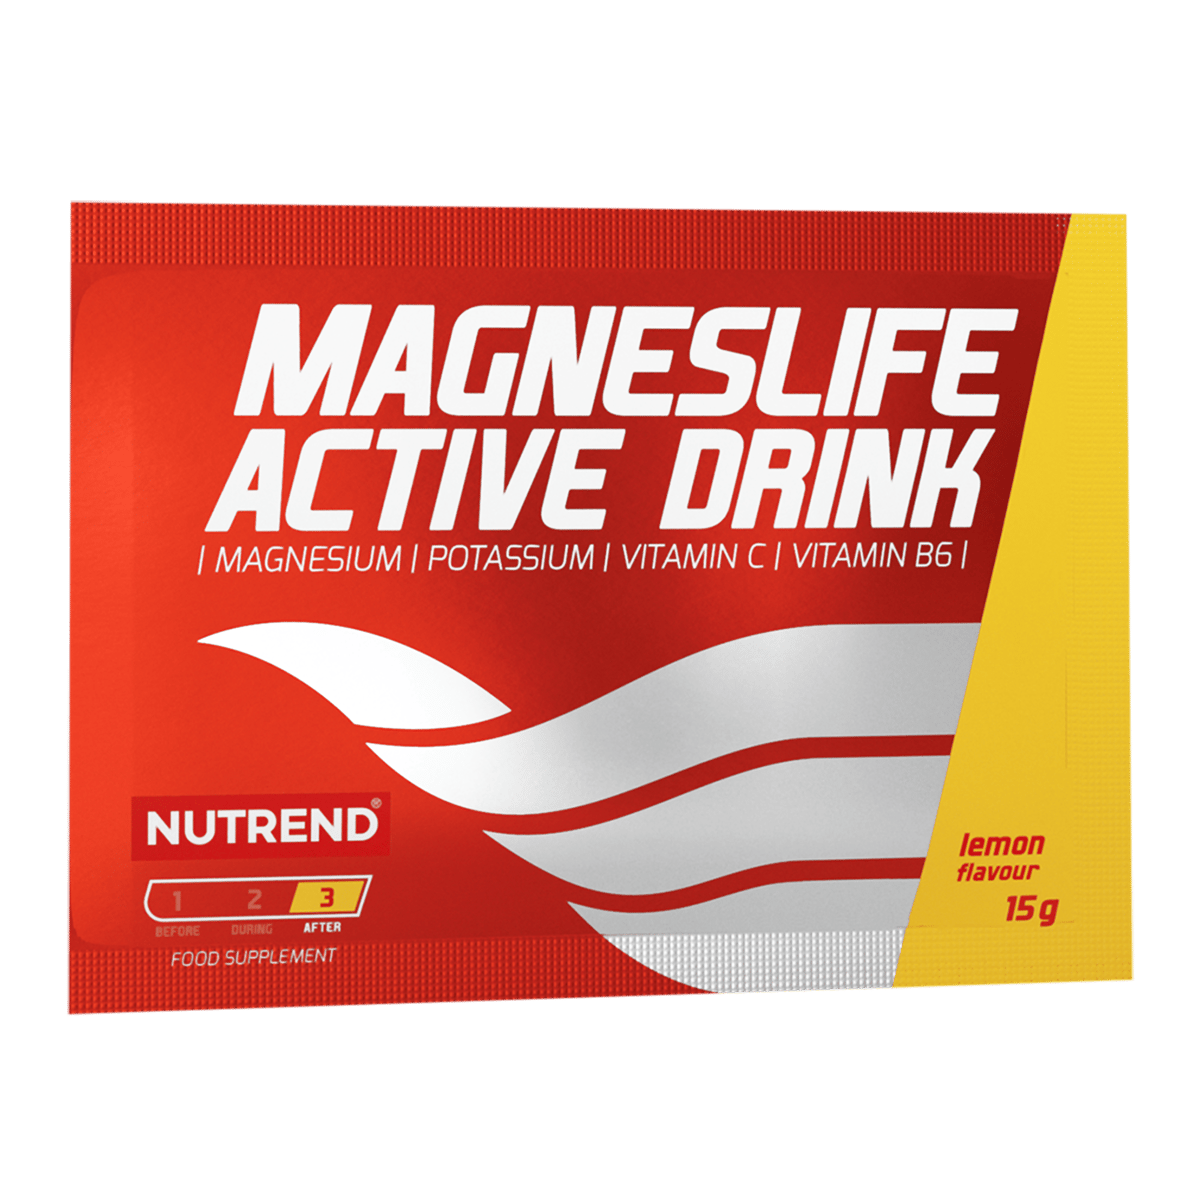 Magneslife Active Drink #0